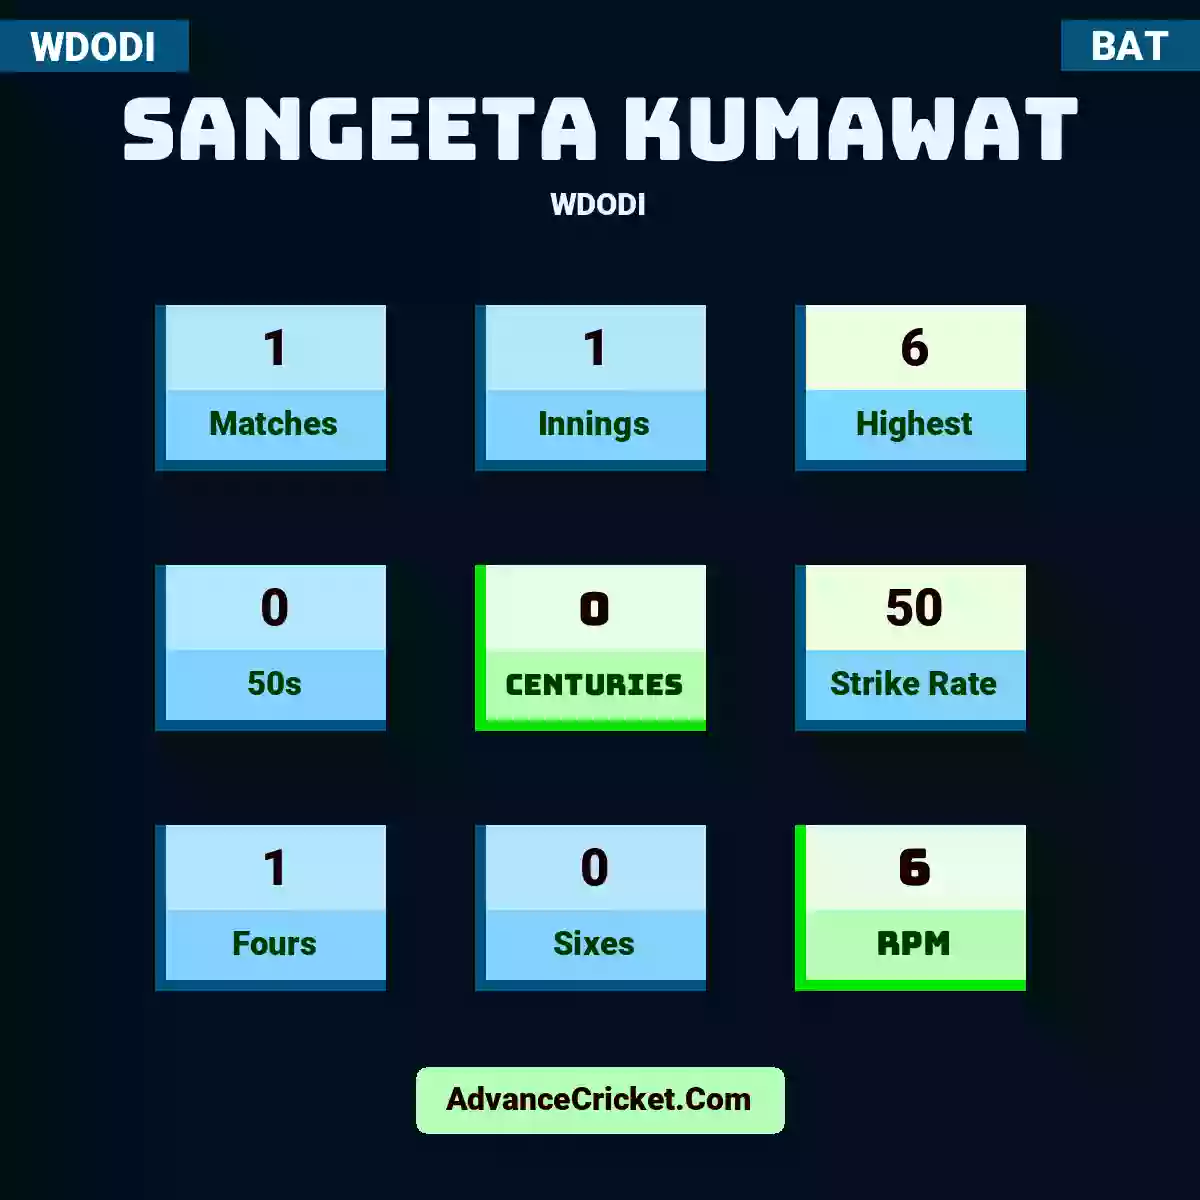 Sangeeta Kumawat WDODI , Sangeeta Kumawat played 1 matches, scored 6 runs as highest, 0 half-centuries, and 0 centuries, with a strike rate of 50. S.Kumawat hit 1 fours and 0 sixes, with an RPM of 6.